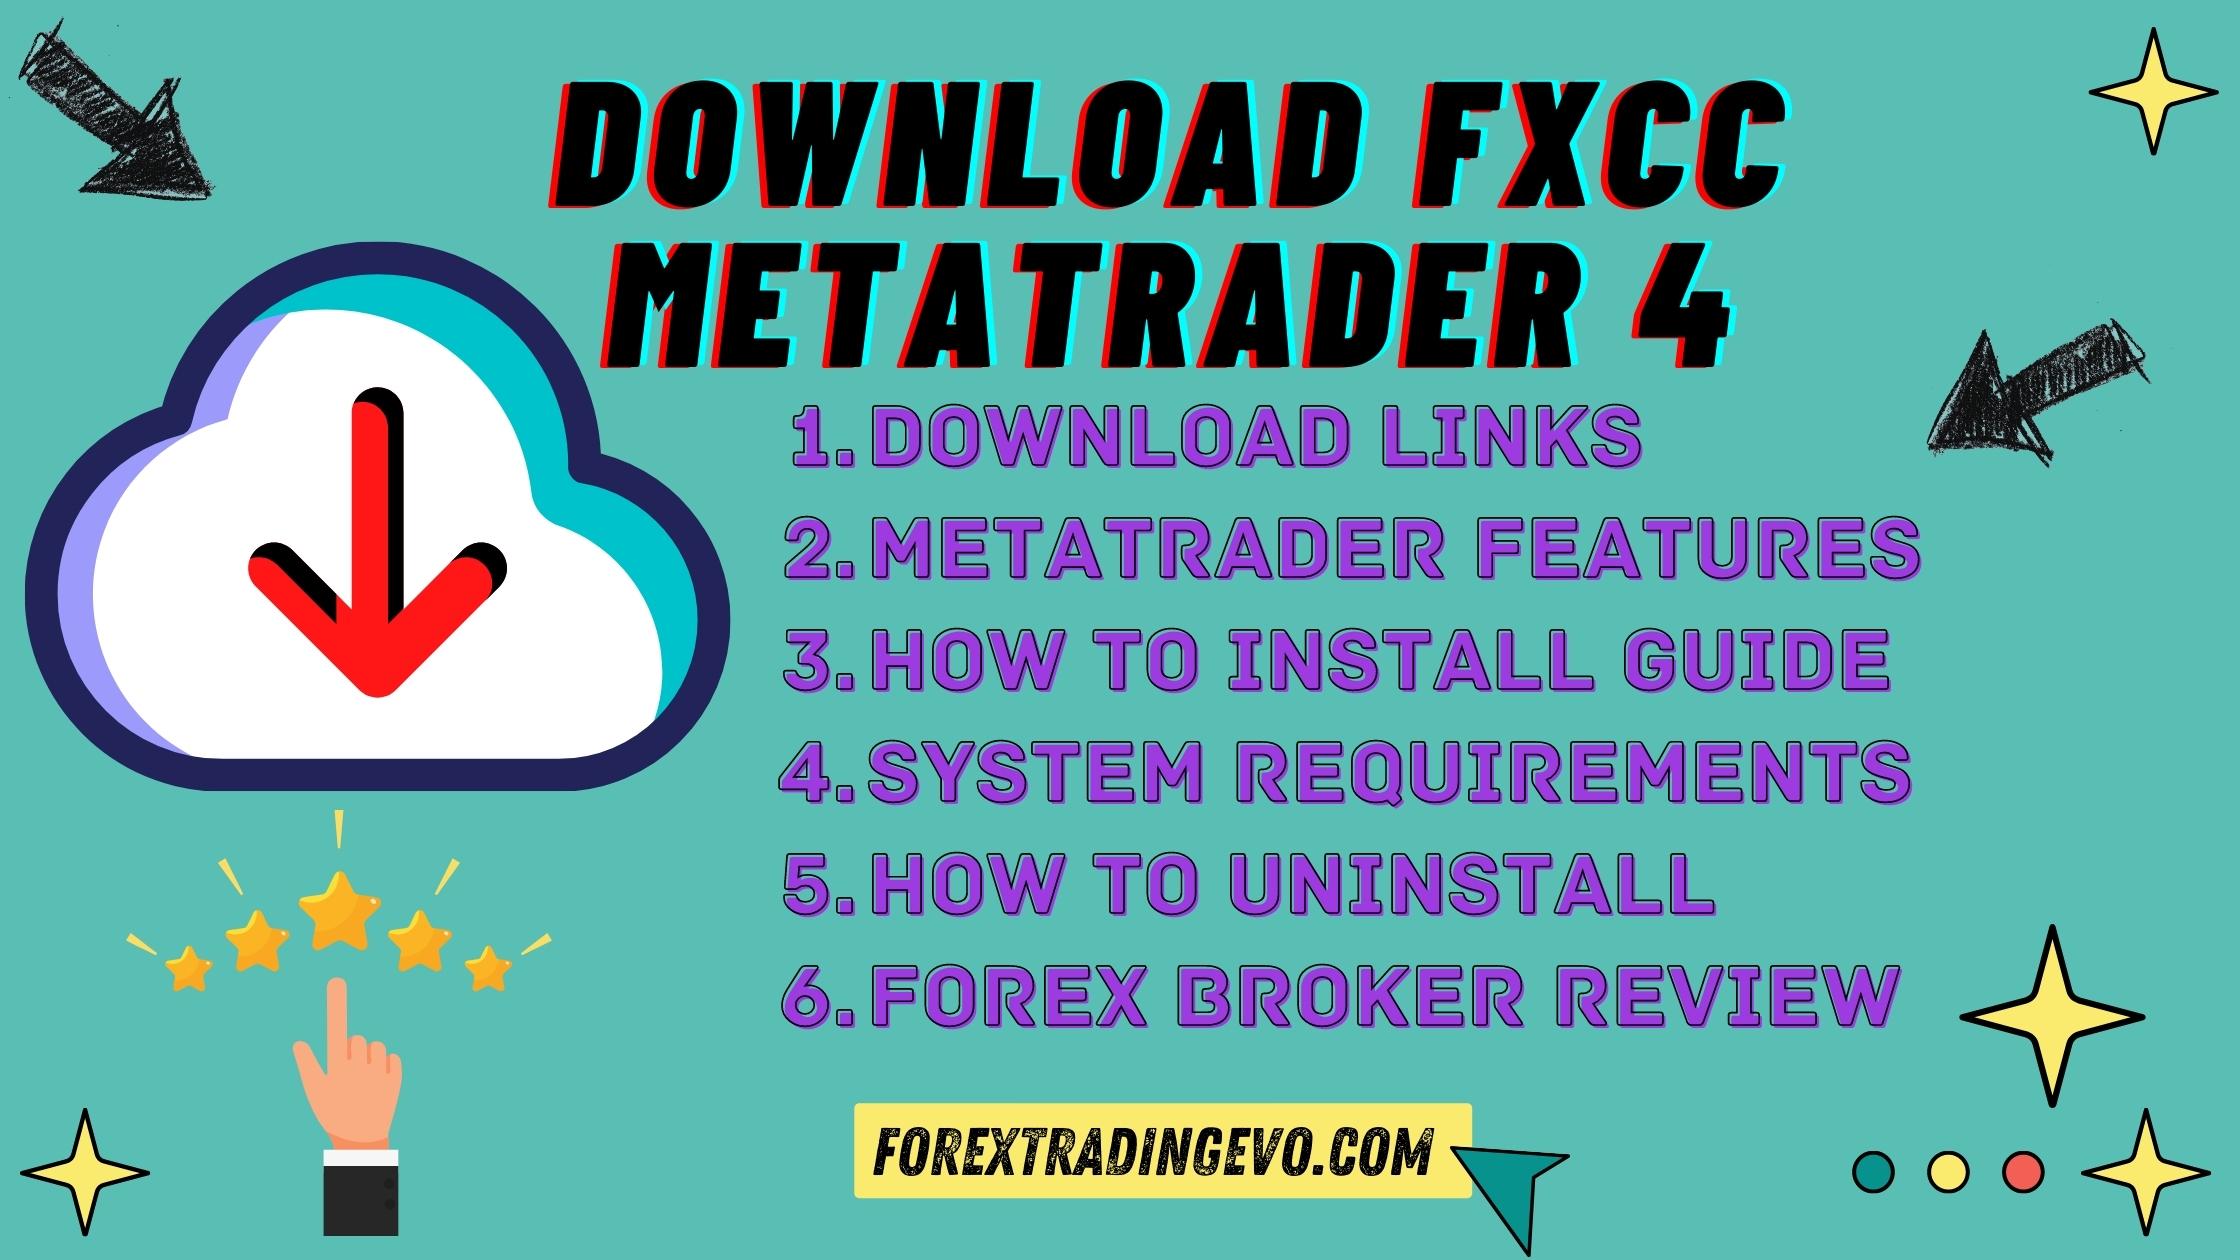 Fxcc Metatrader 4